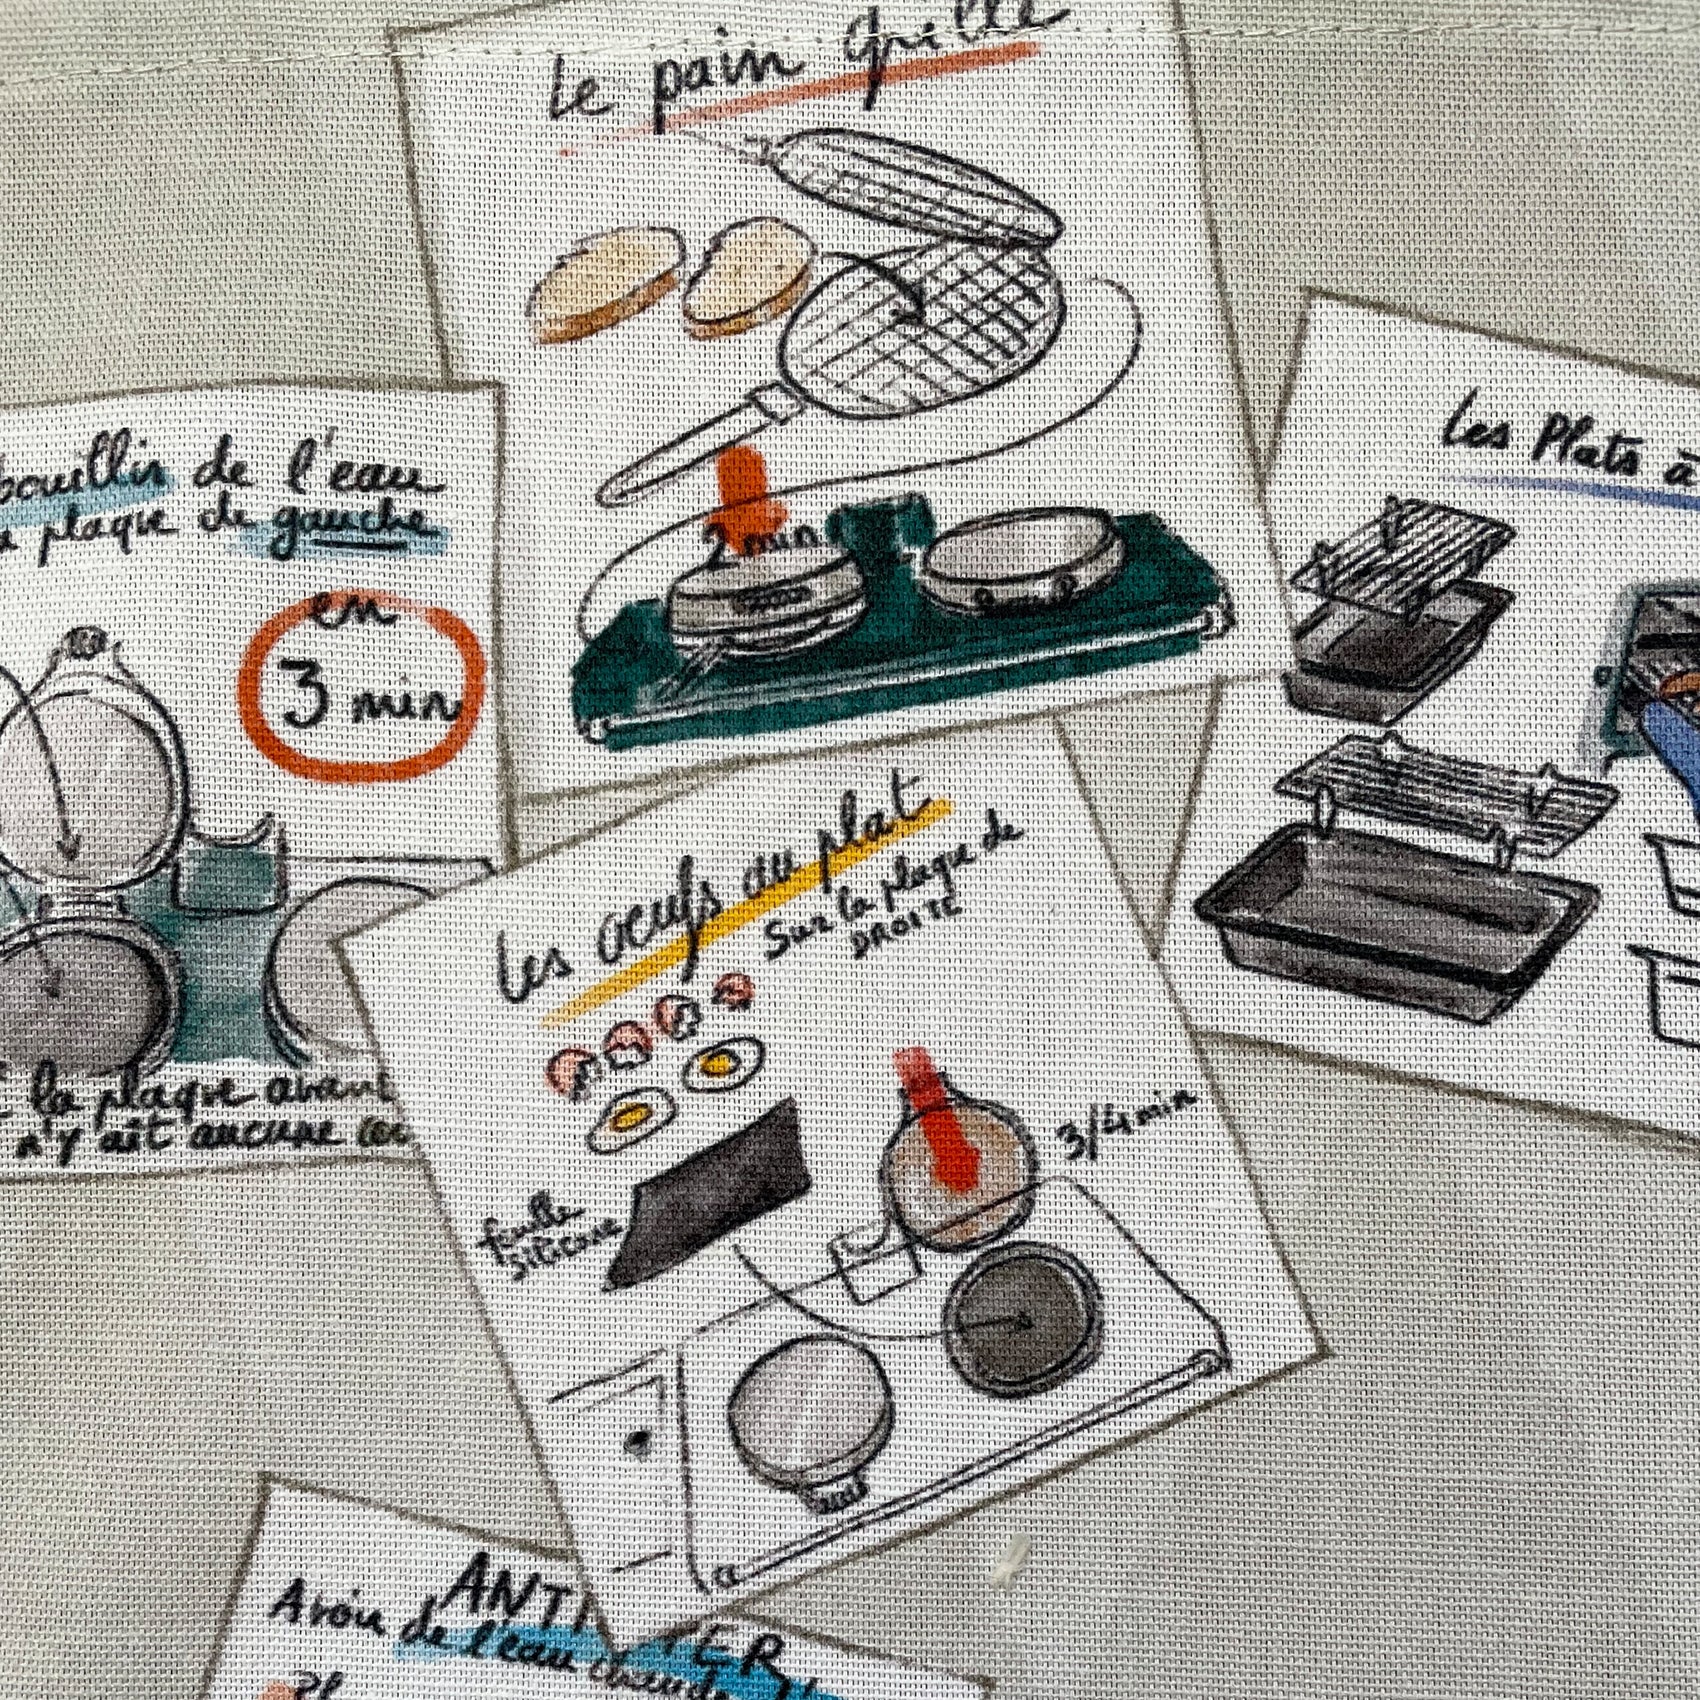 Tea Towel - Clotilde Boutrolle - Clotilde Boutrolle French Range Cooker Drawings Tea Towel